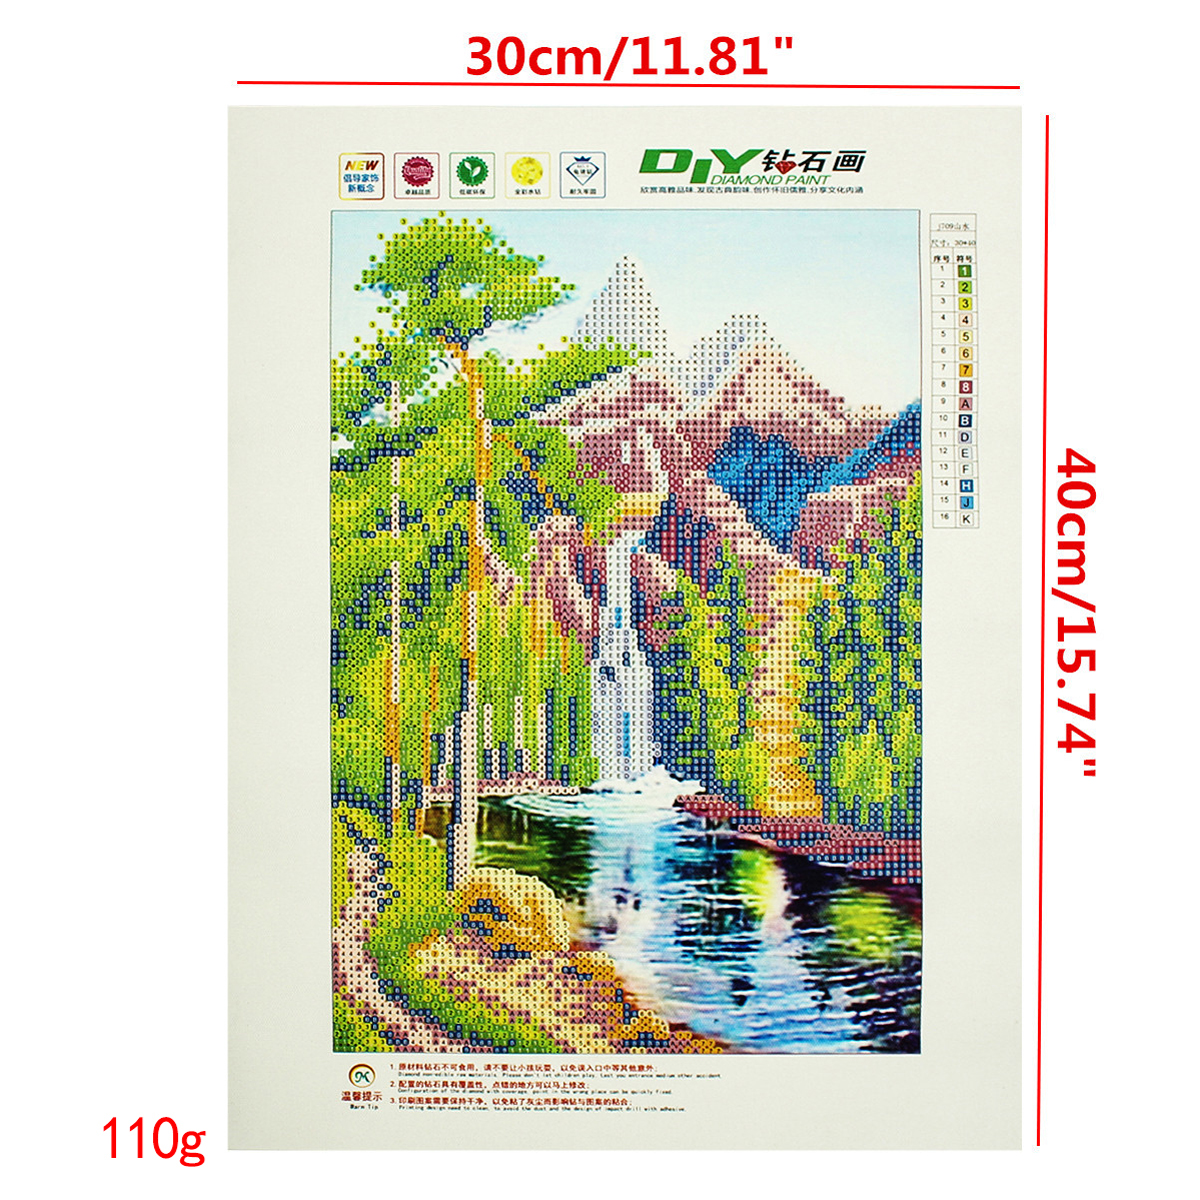 16x12-Inches-5D-Diamond-Painting-Landscape-Scenery-Craft-DIY-Cross-Stitch-Home-Decor-1096987